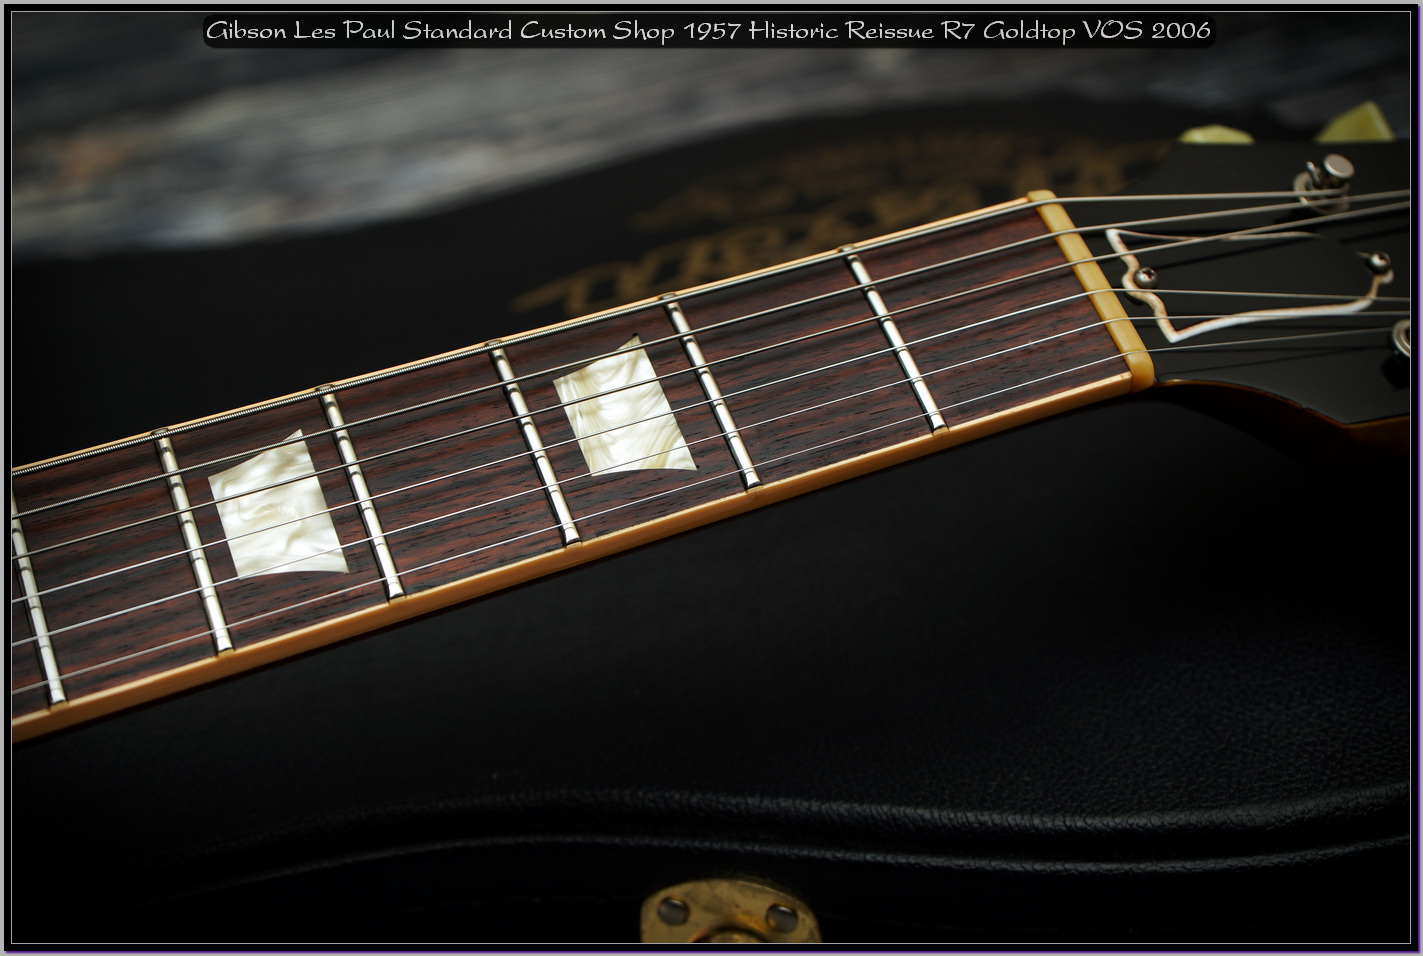 Gibson Les Paul Standard Custom Shop 1957 Historic Reissue R7 Goldtop VOS 2006 05_x1400.jpg